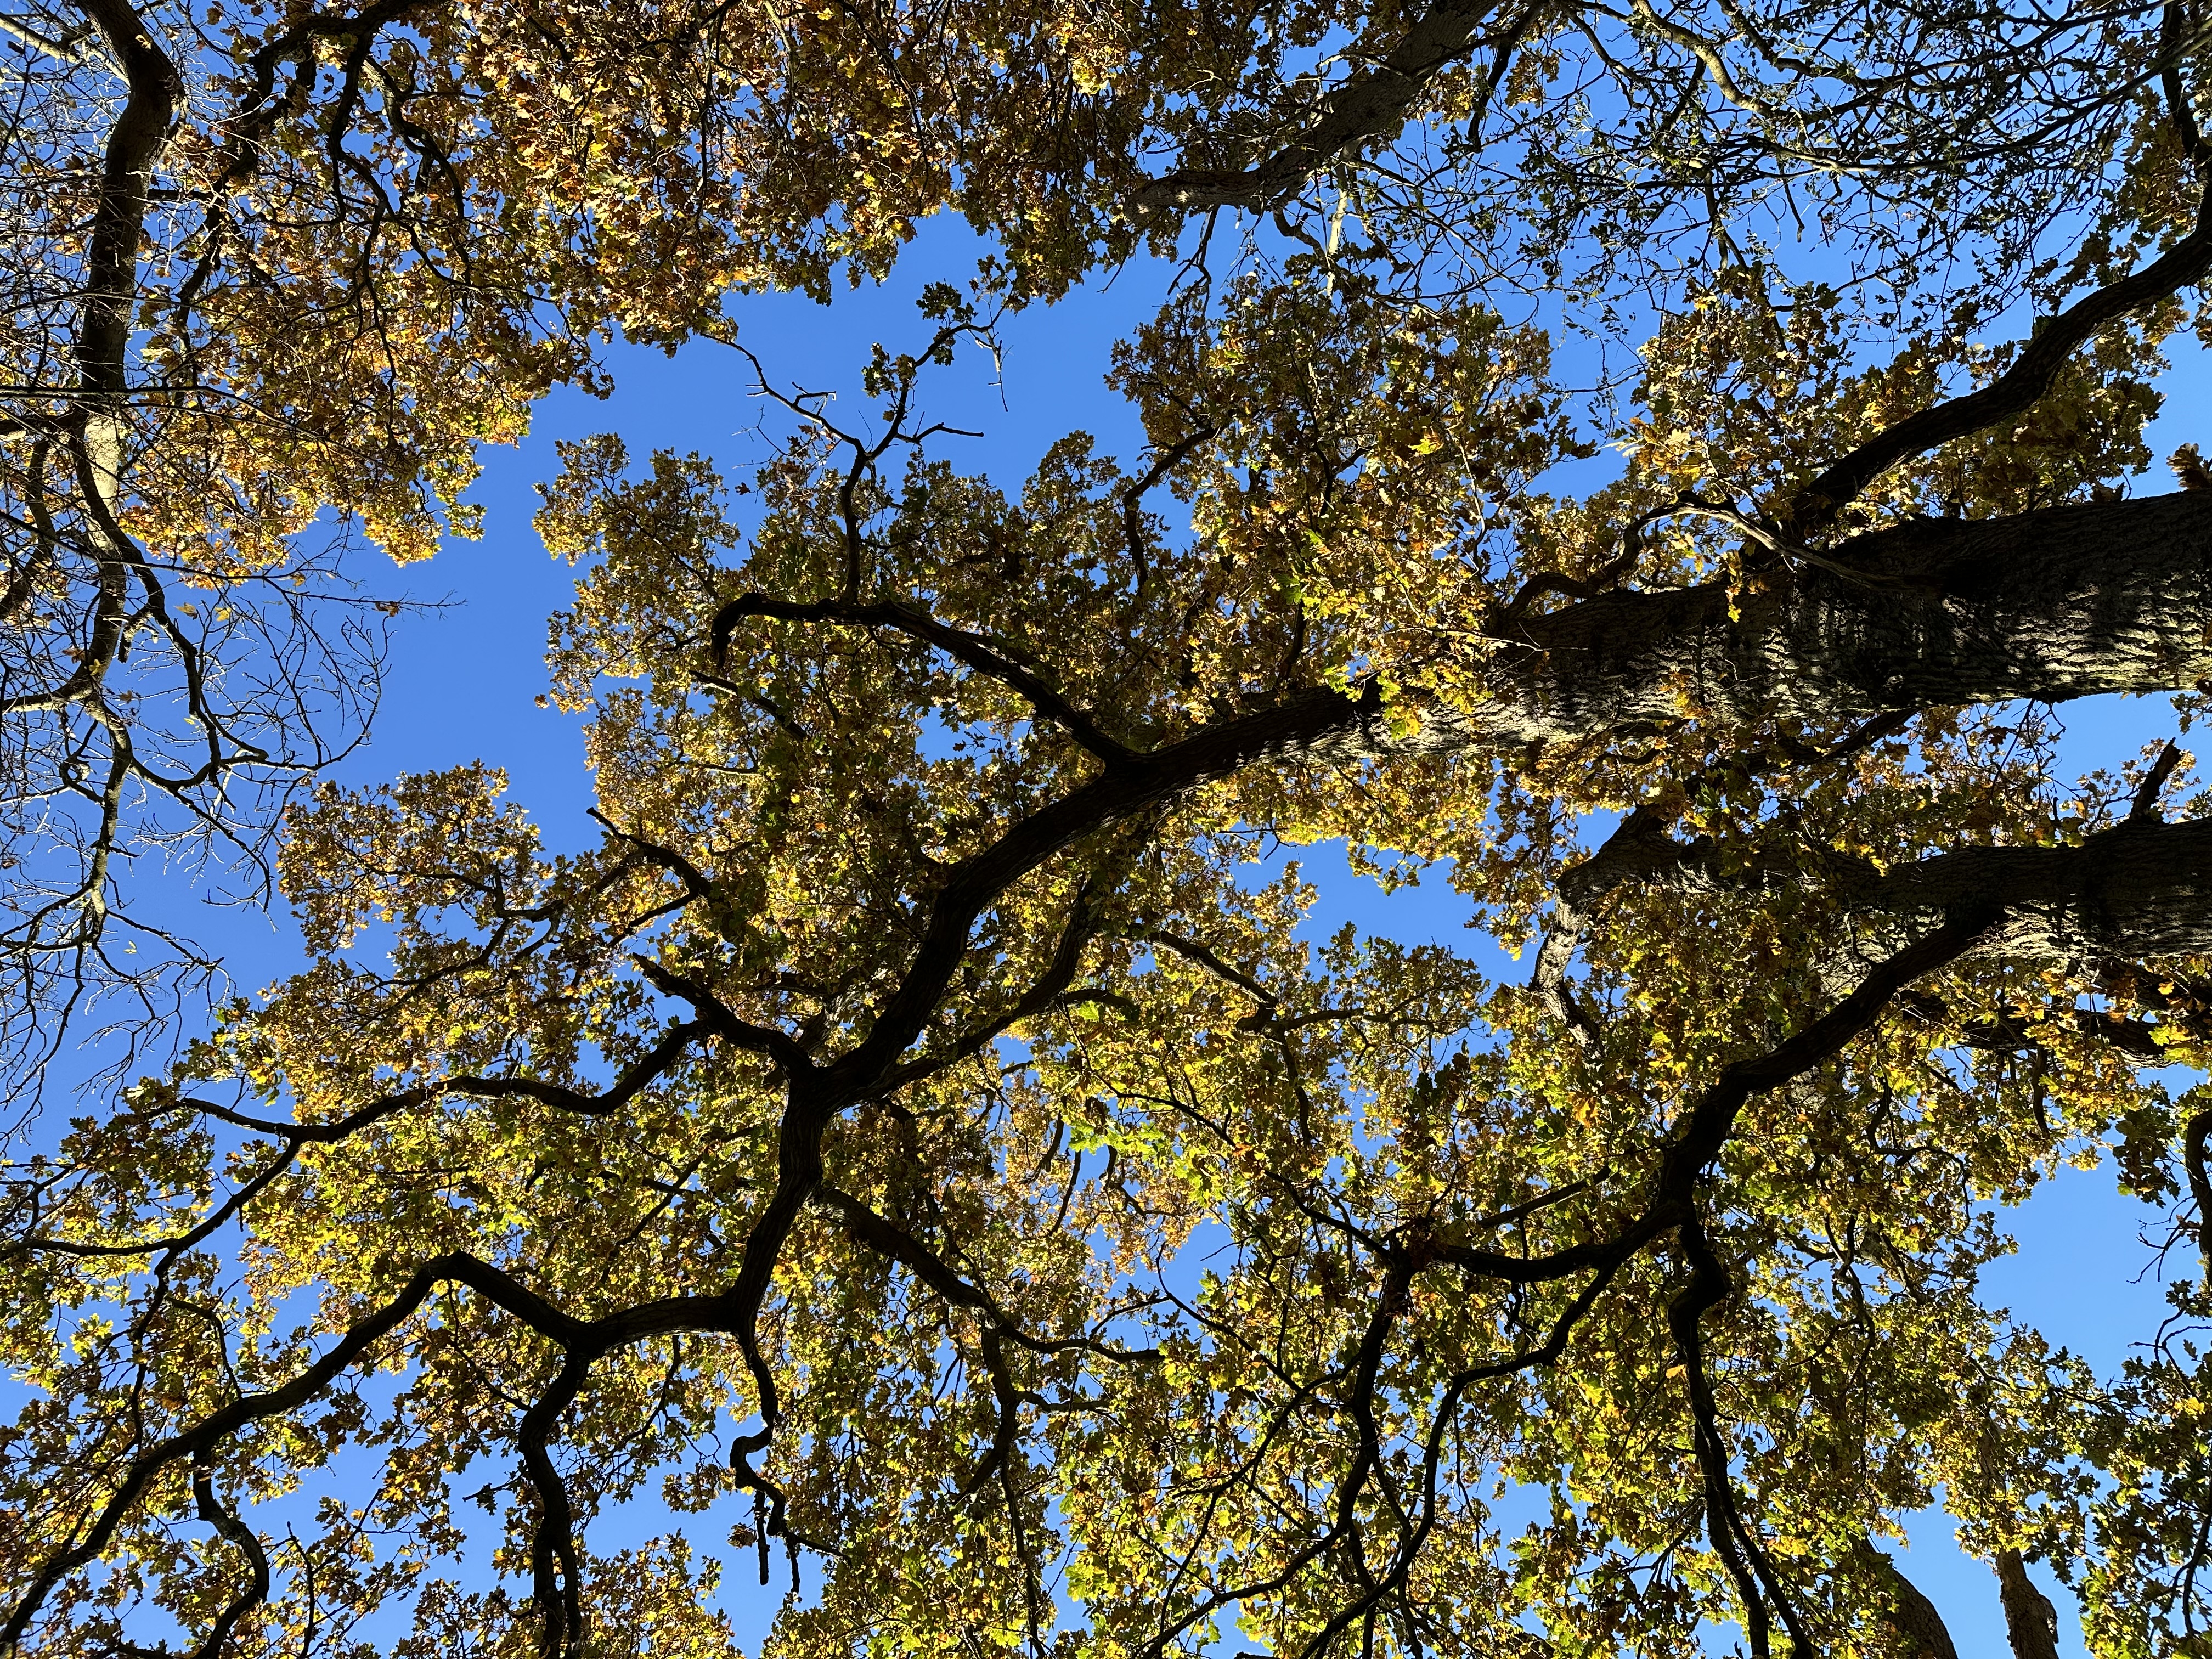 Trees against a blue sky